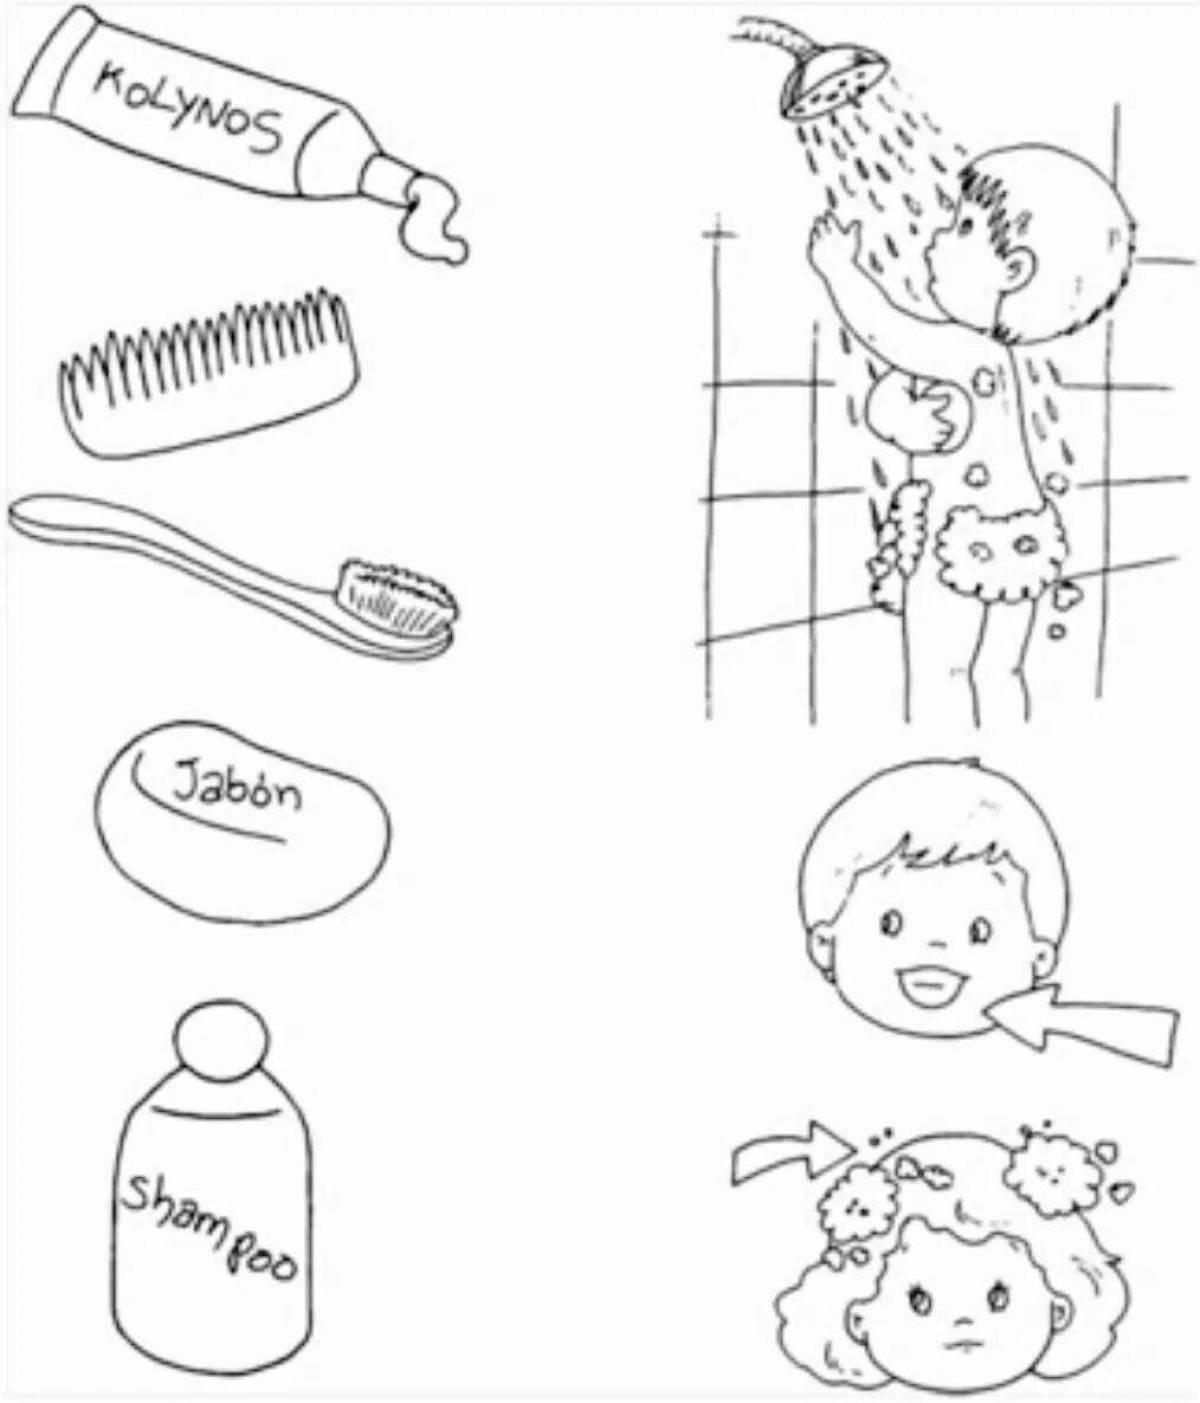 Involvement in personal hygiene